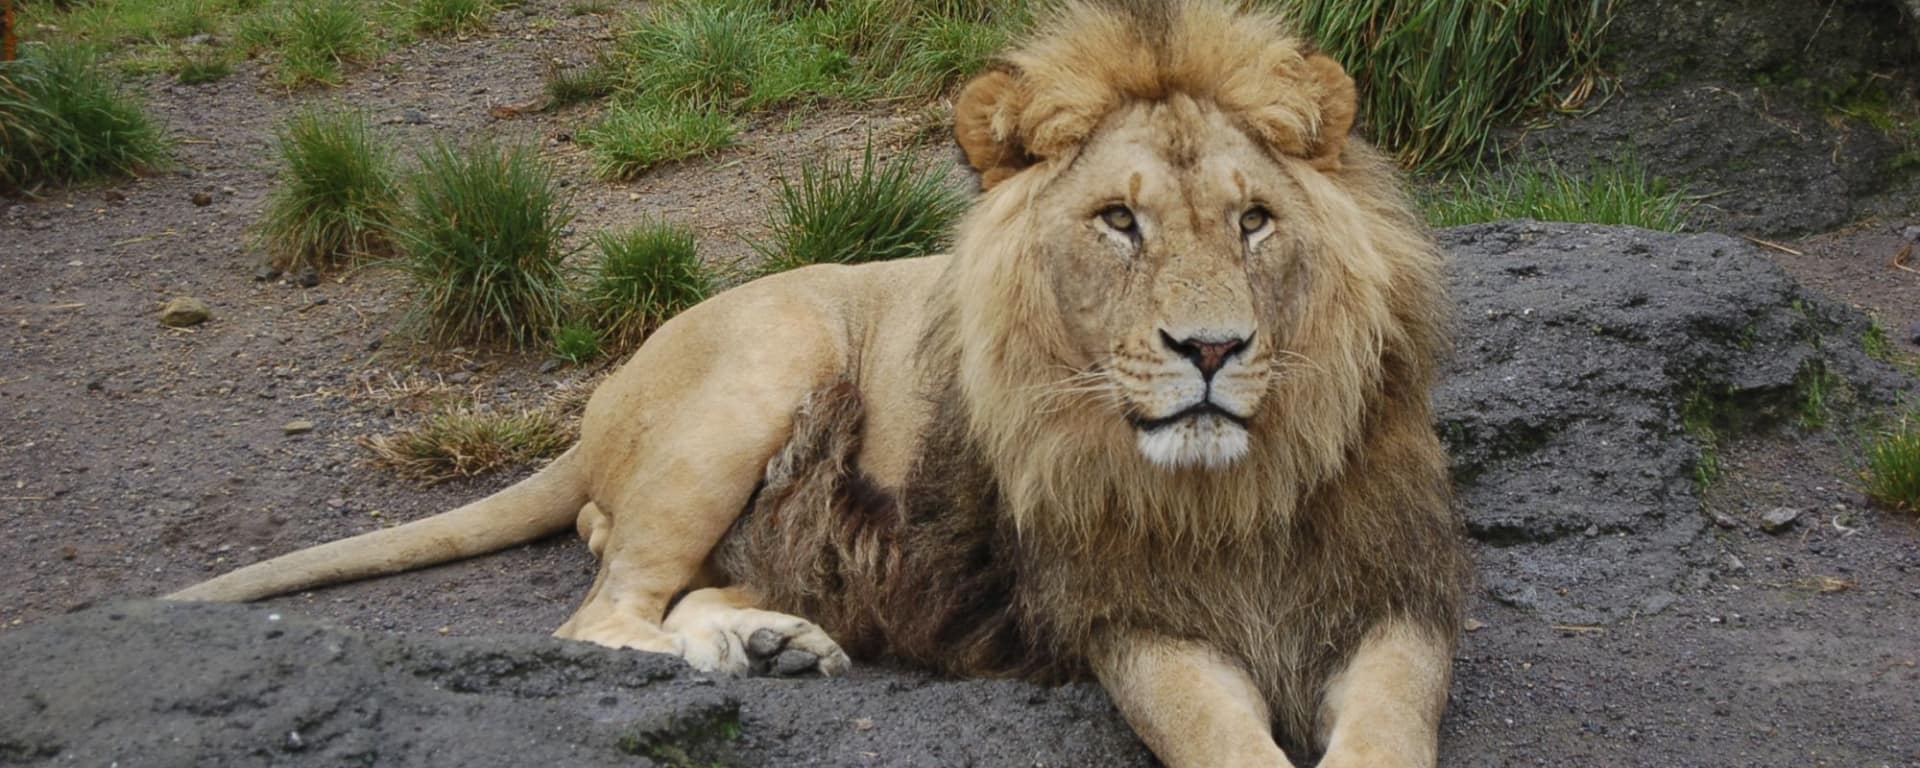 L'état inconnu de Gujarat de Ahmedabad: Gir Nationalpark: Lion